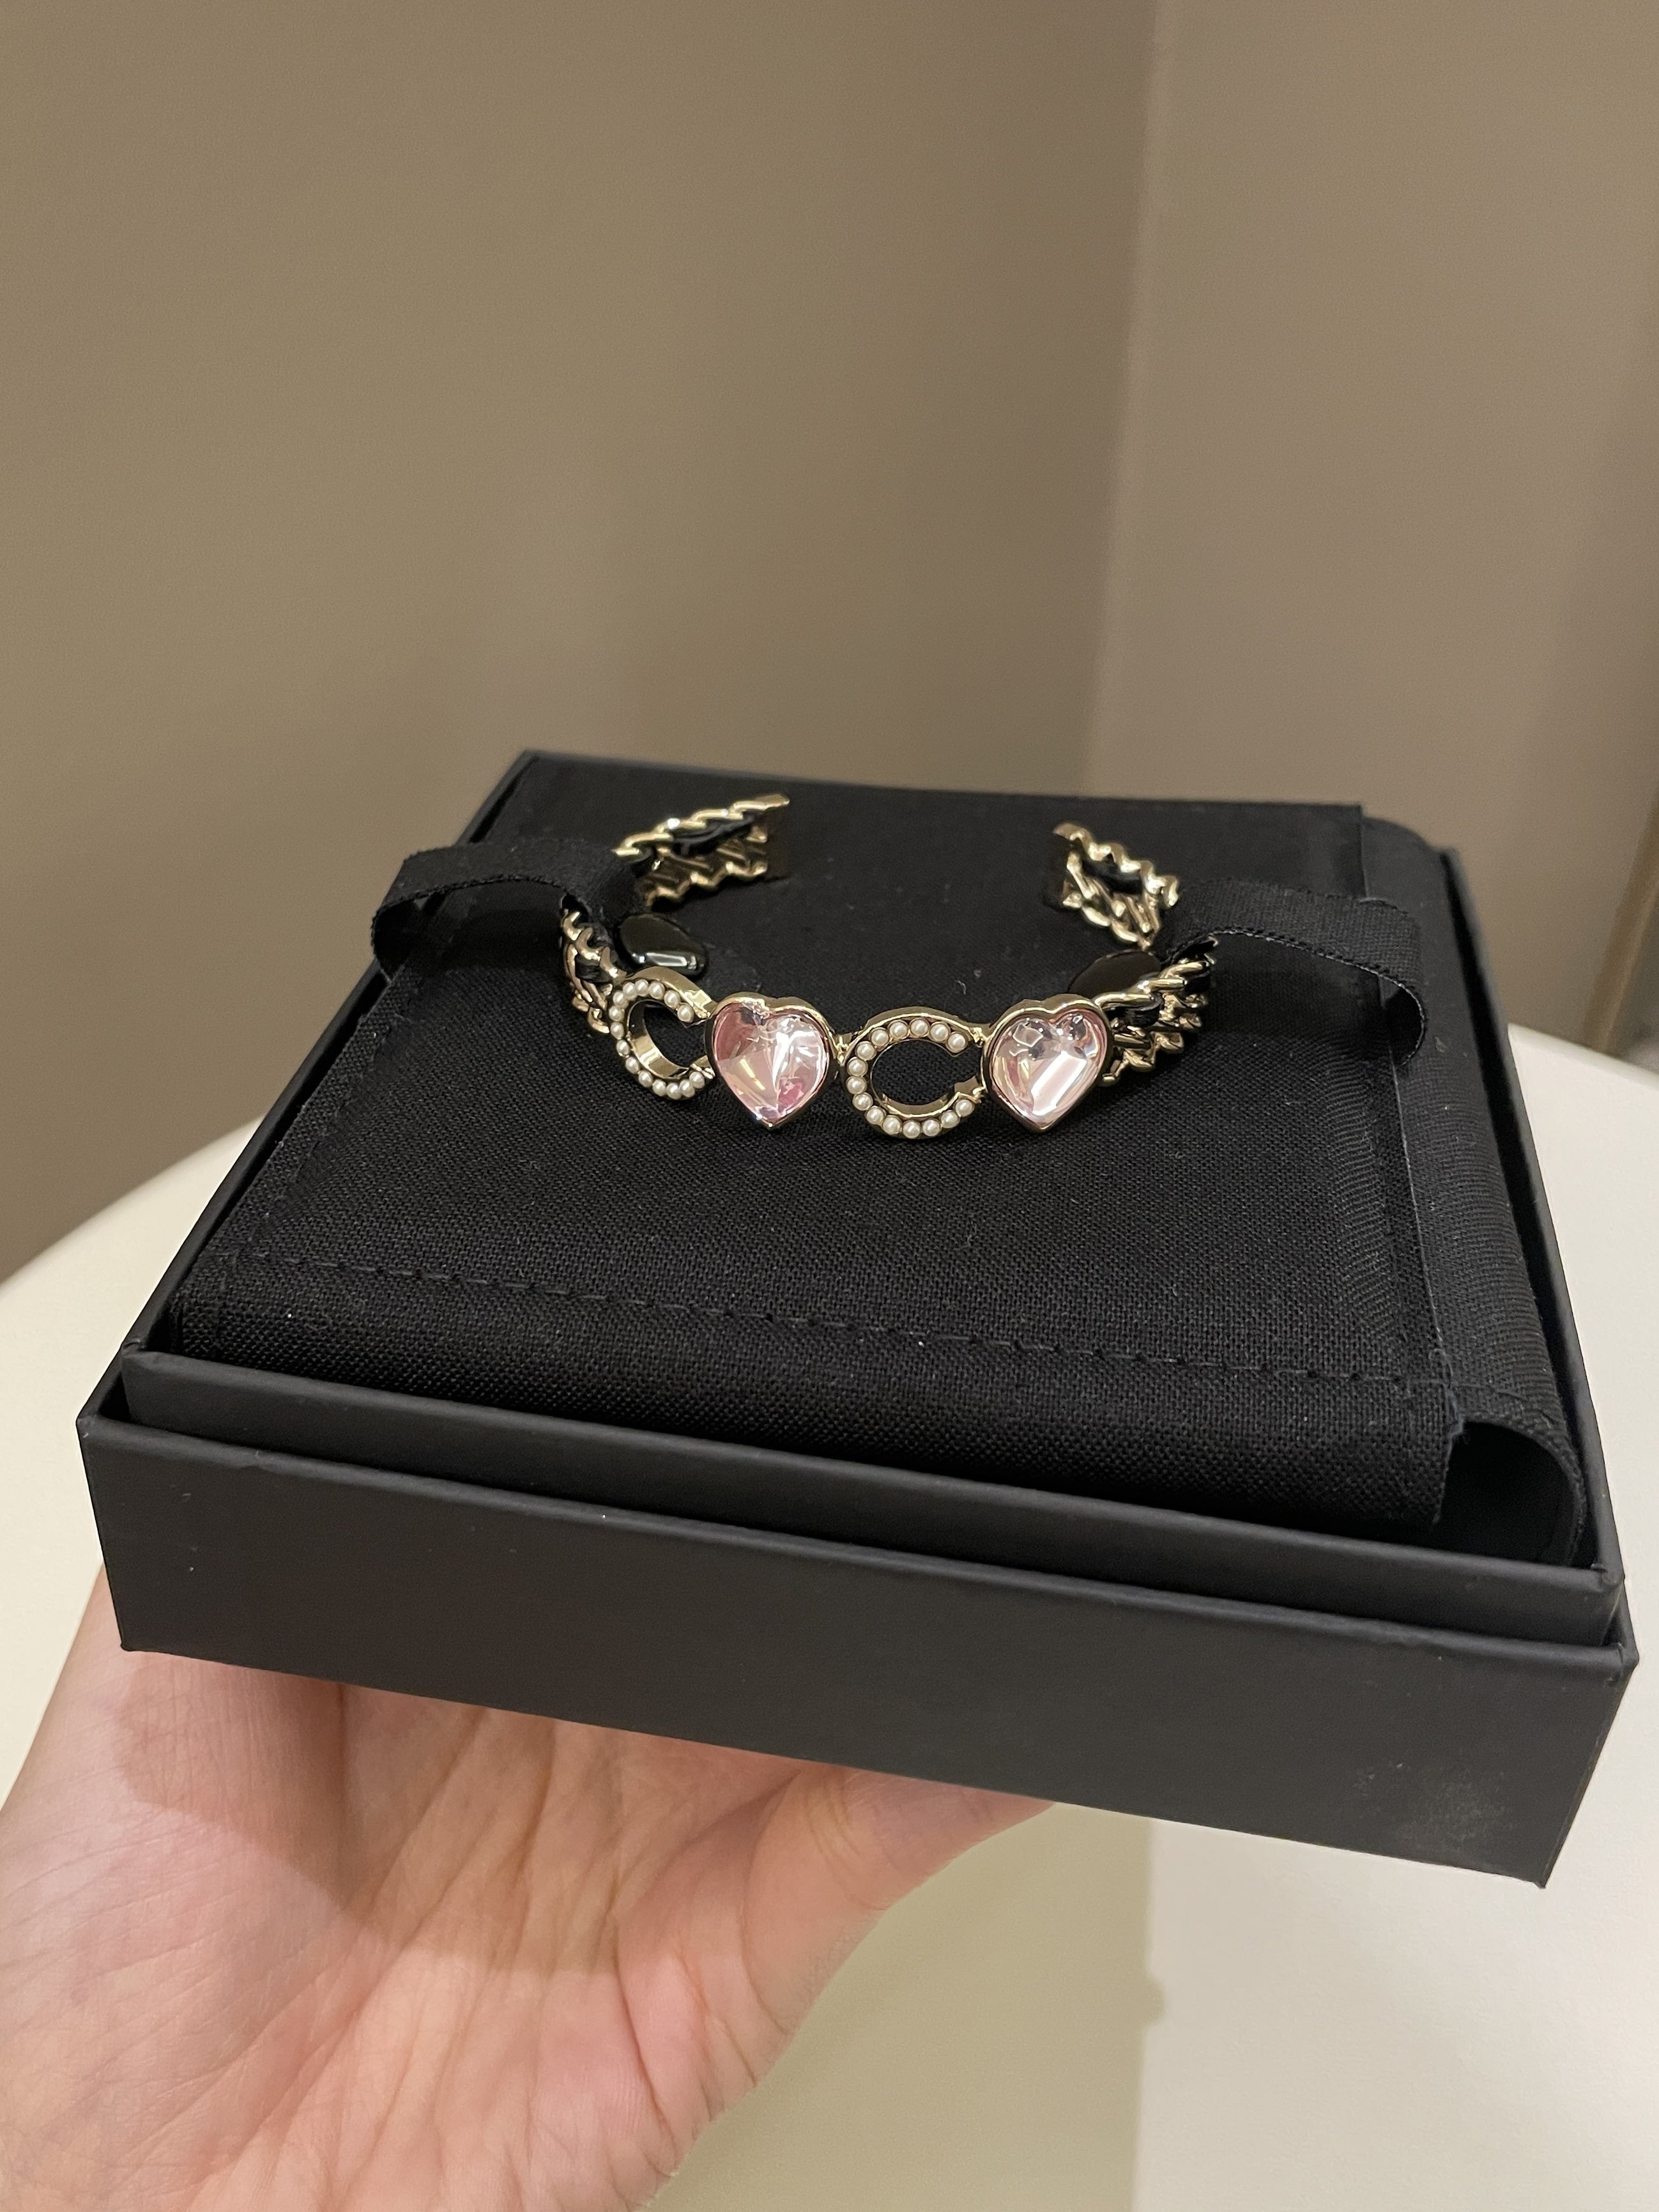 Chanel 23C Coco Cuff Bracelet
Ivory Glass Pearls